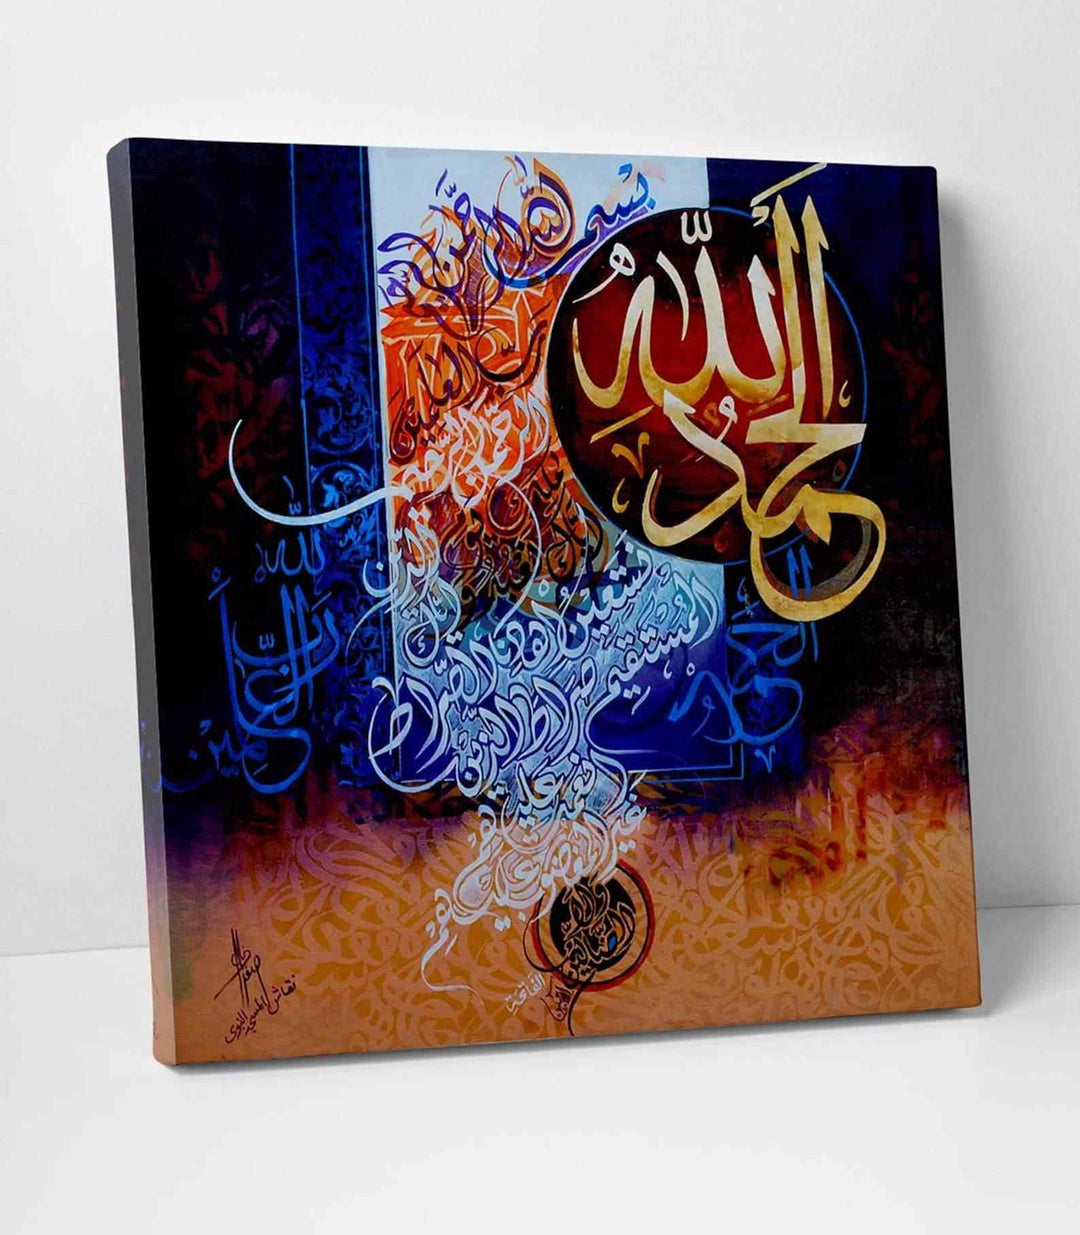 Surah Al Fatihah v2 Oil Painting Reproduction Canvas Print Islamic Wall Art - Islamic Wall Art Store